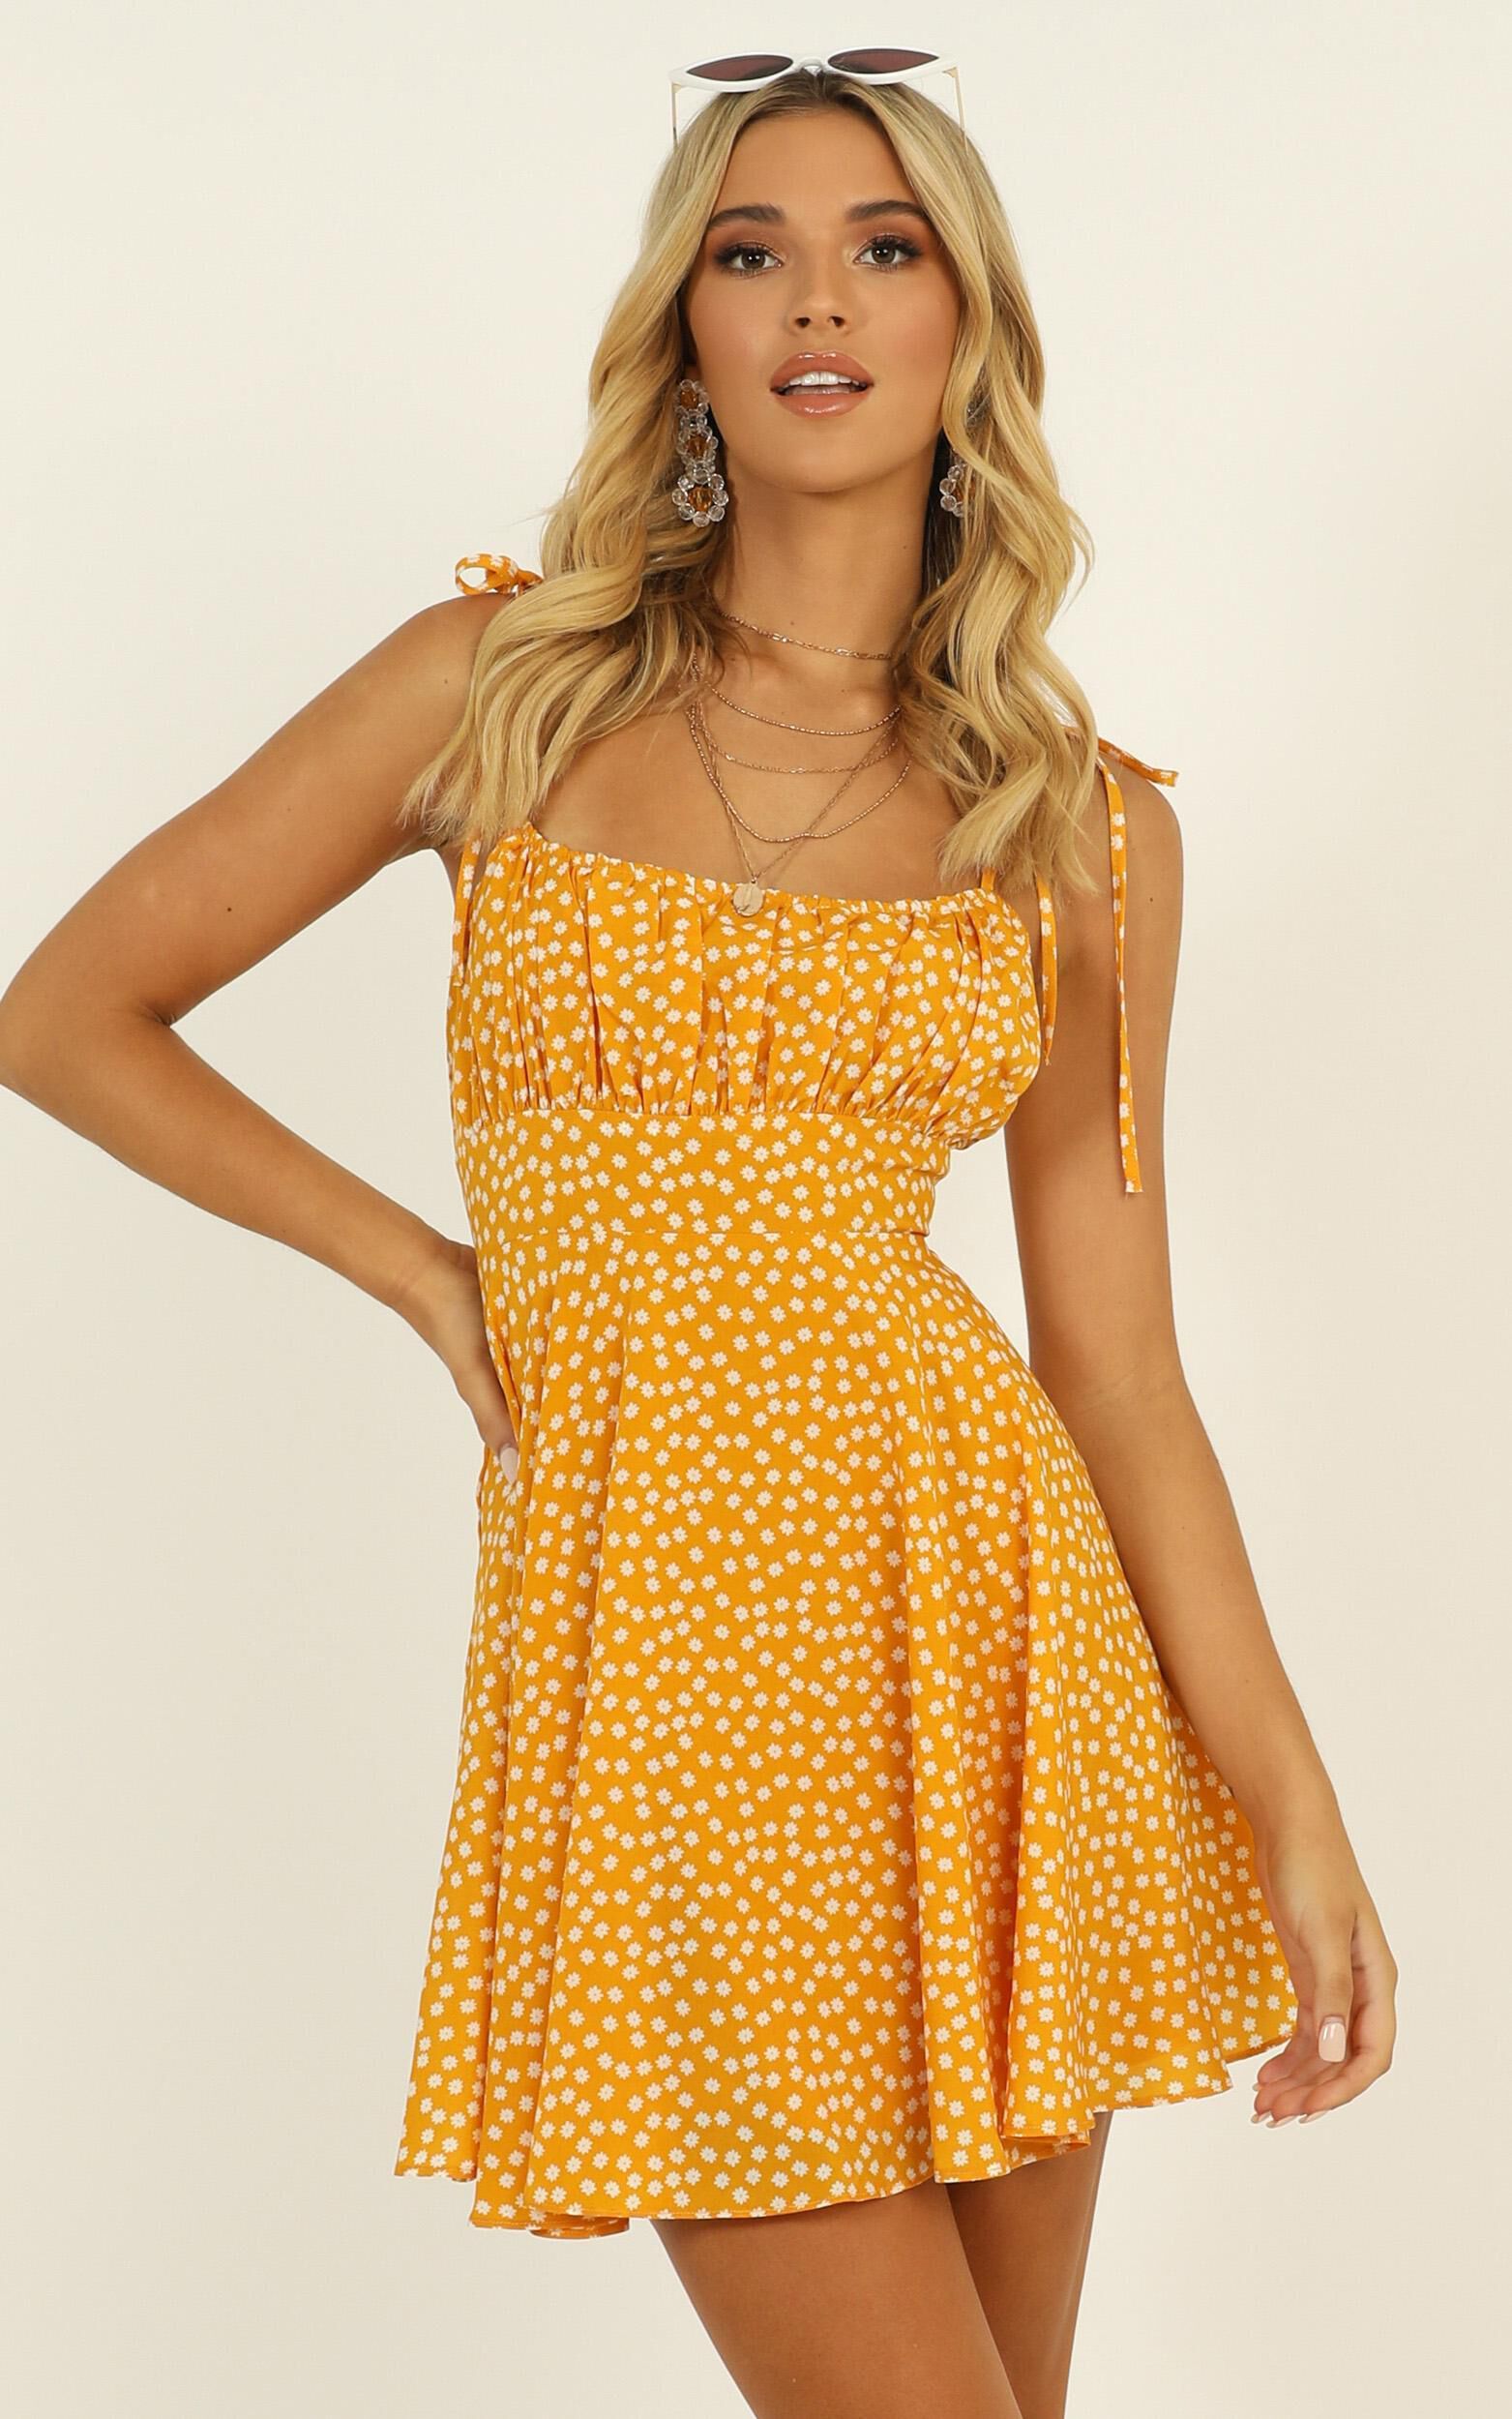 Summer Jam Sweetheart Mini Dress in Yellow Floral - 04, YEL3